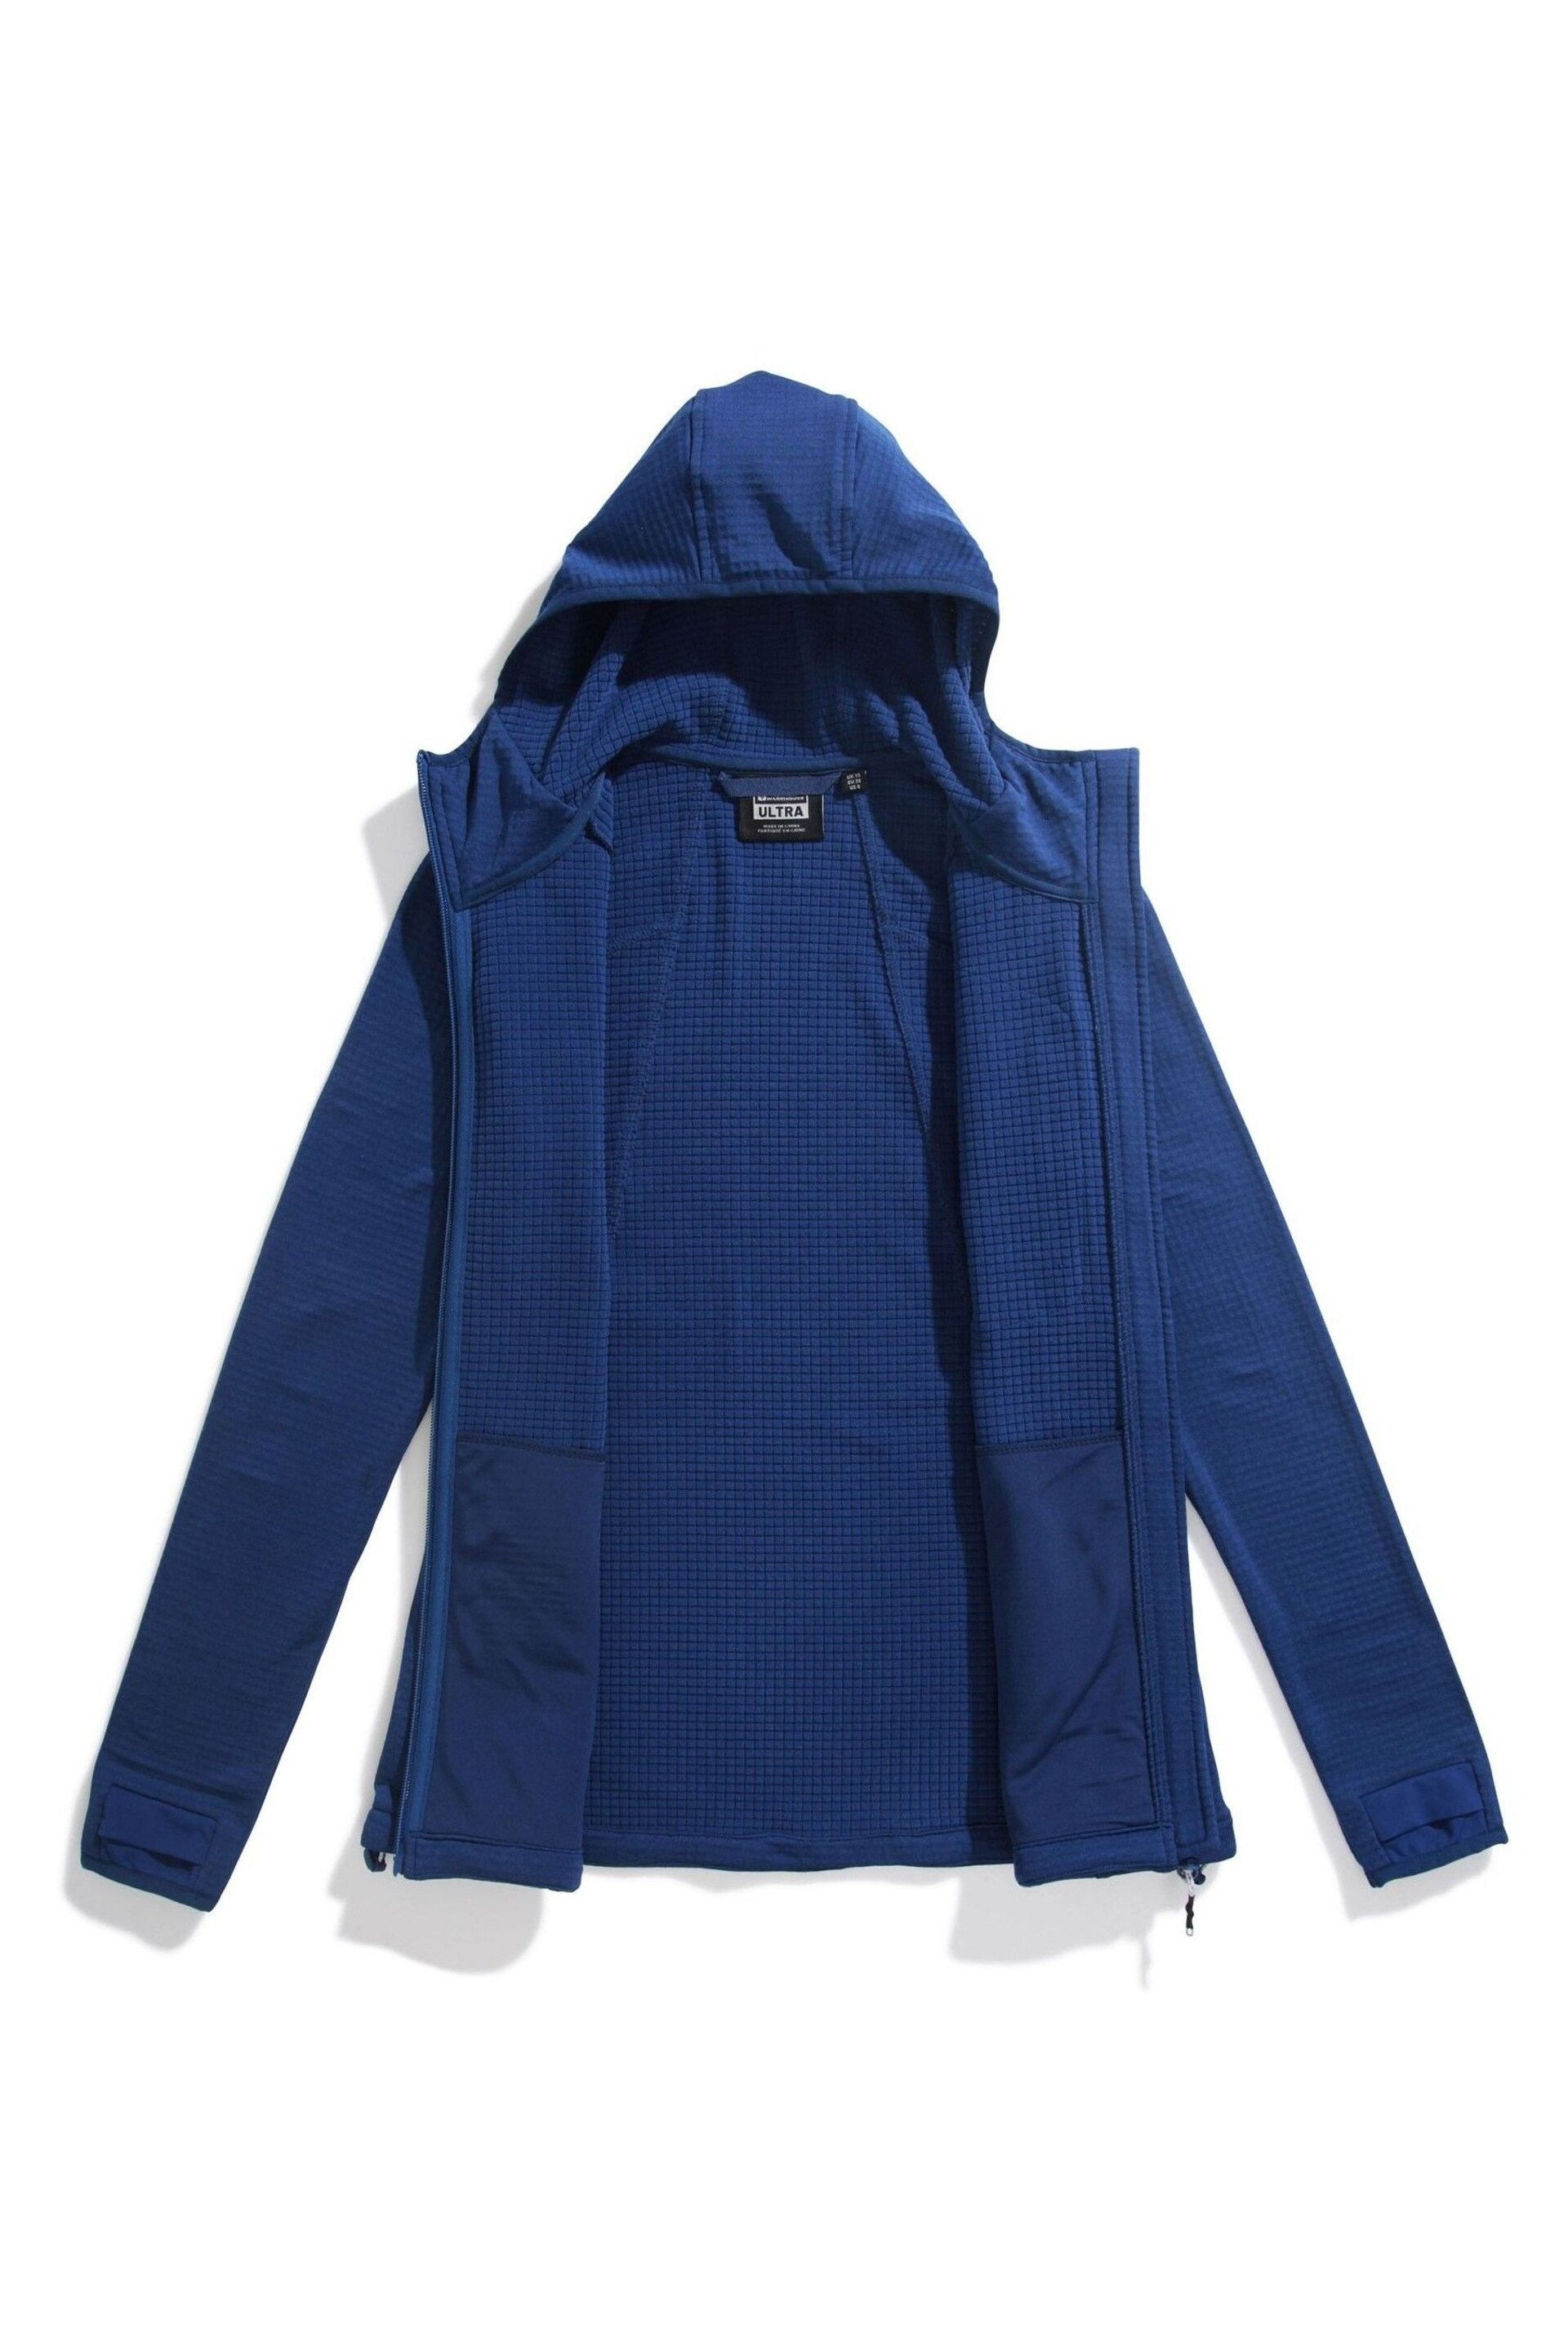 Mountain Warehouse Blue Womens Ultra Crevasse Water Resistant Hooded Fleece - Image 2 of 4